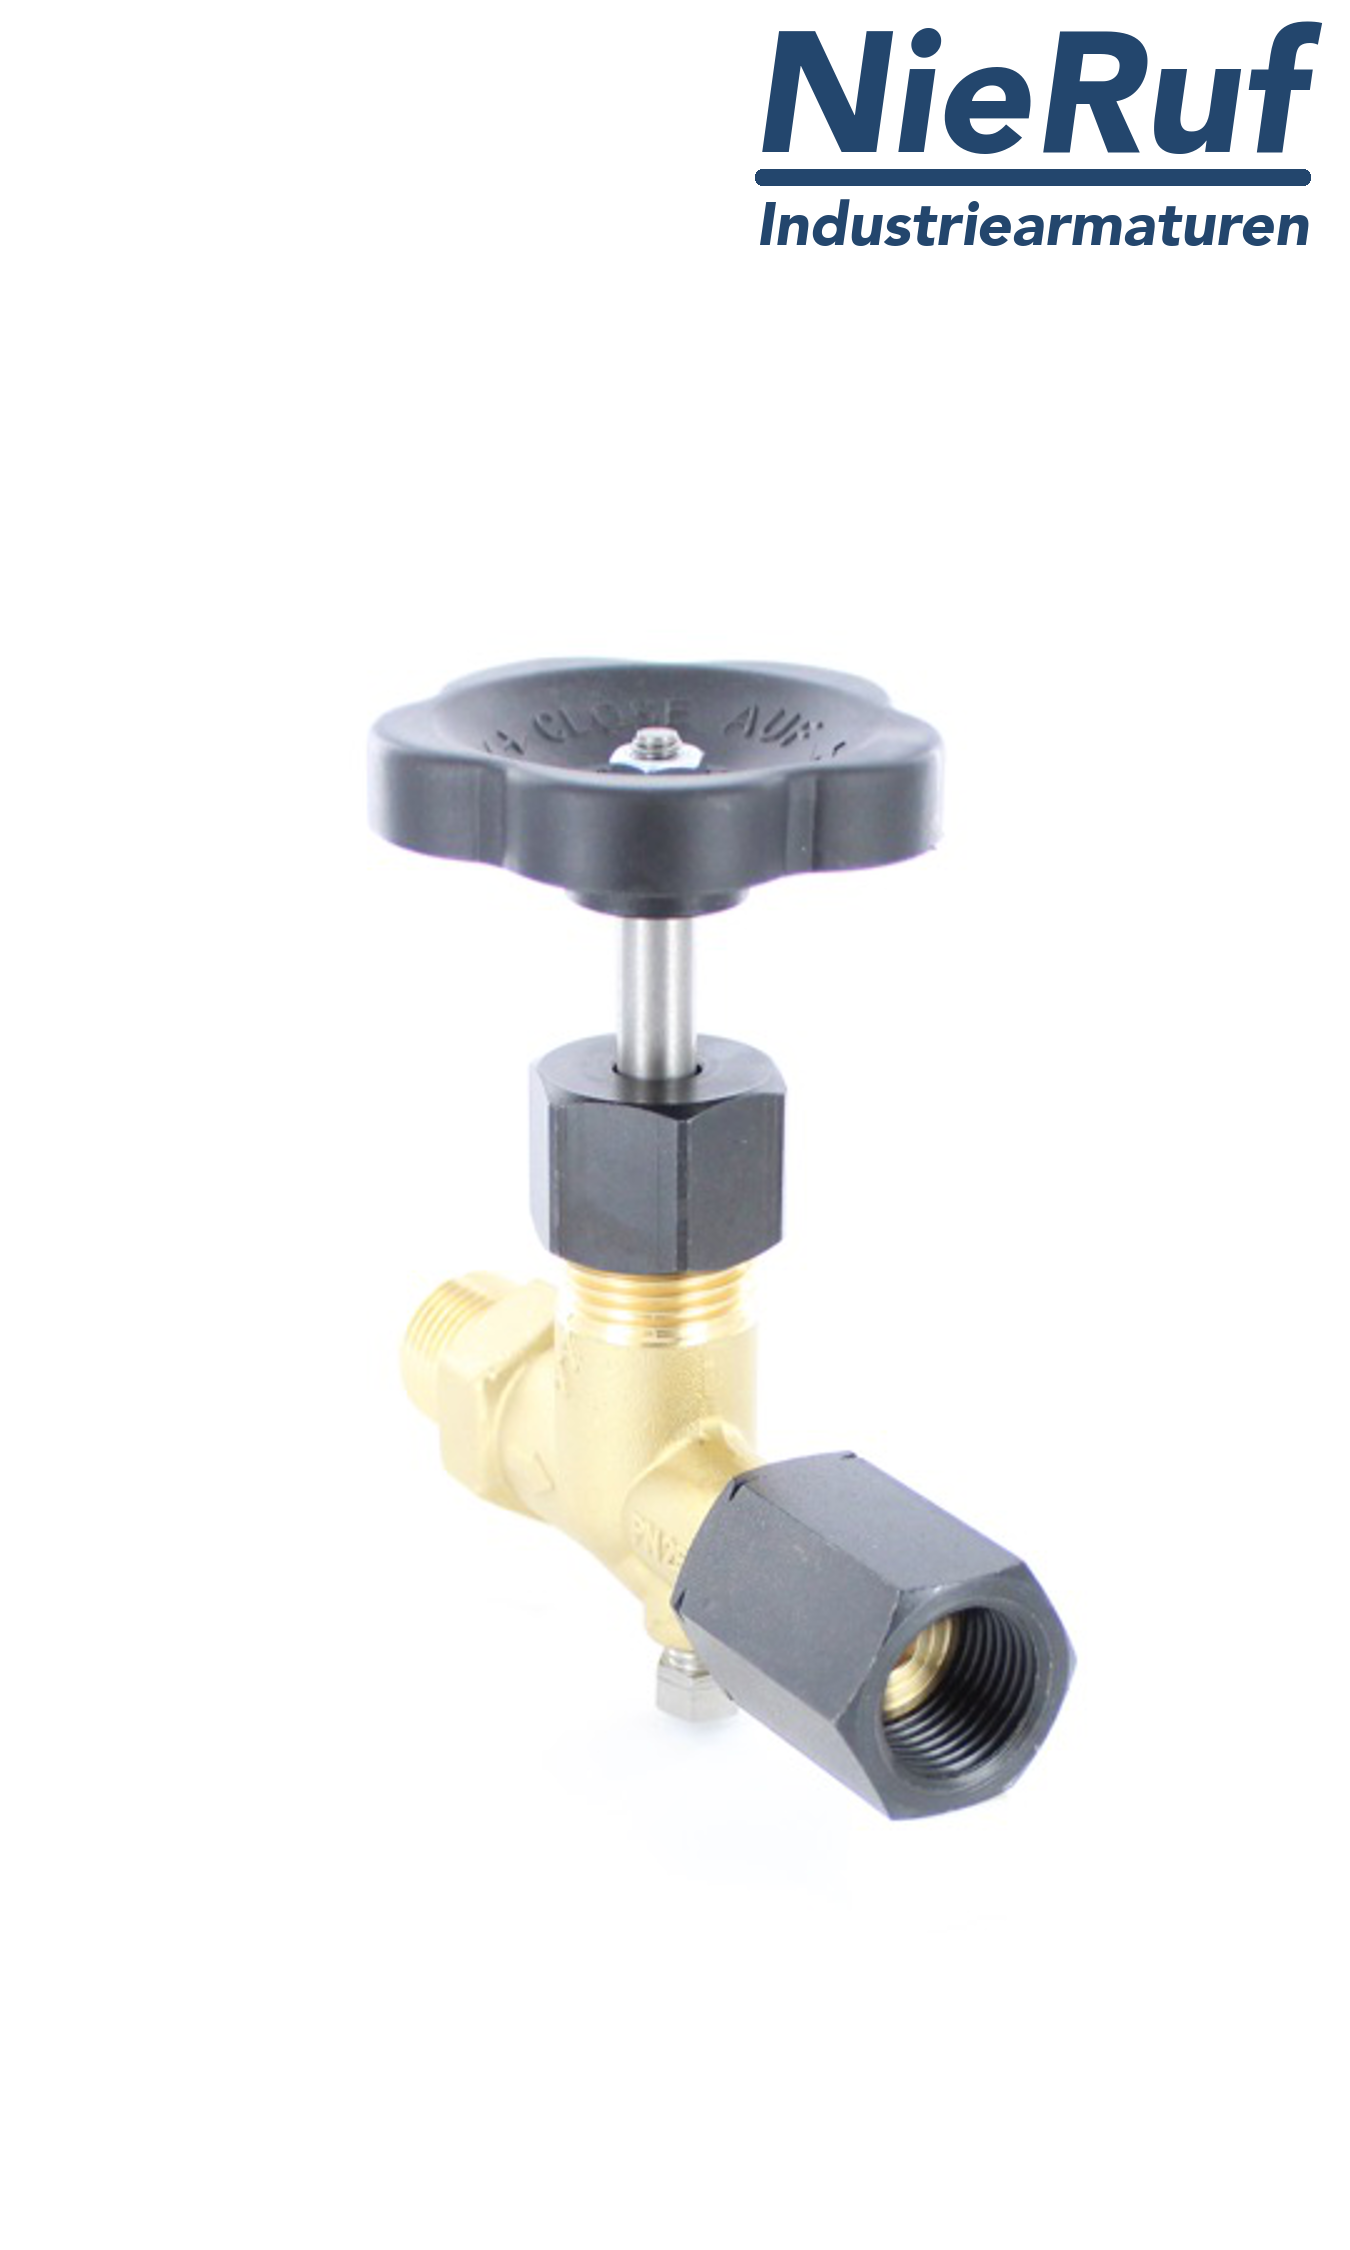 manometer gauge valves male thread x adapter for instrument holder with nut adjustable DIN 16270 brass 250 bar